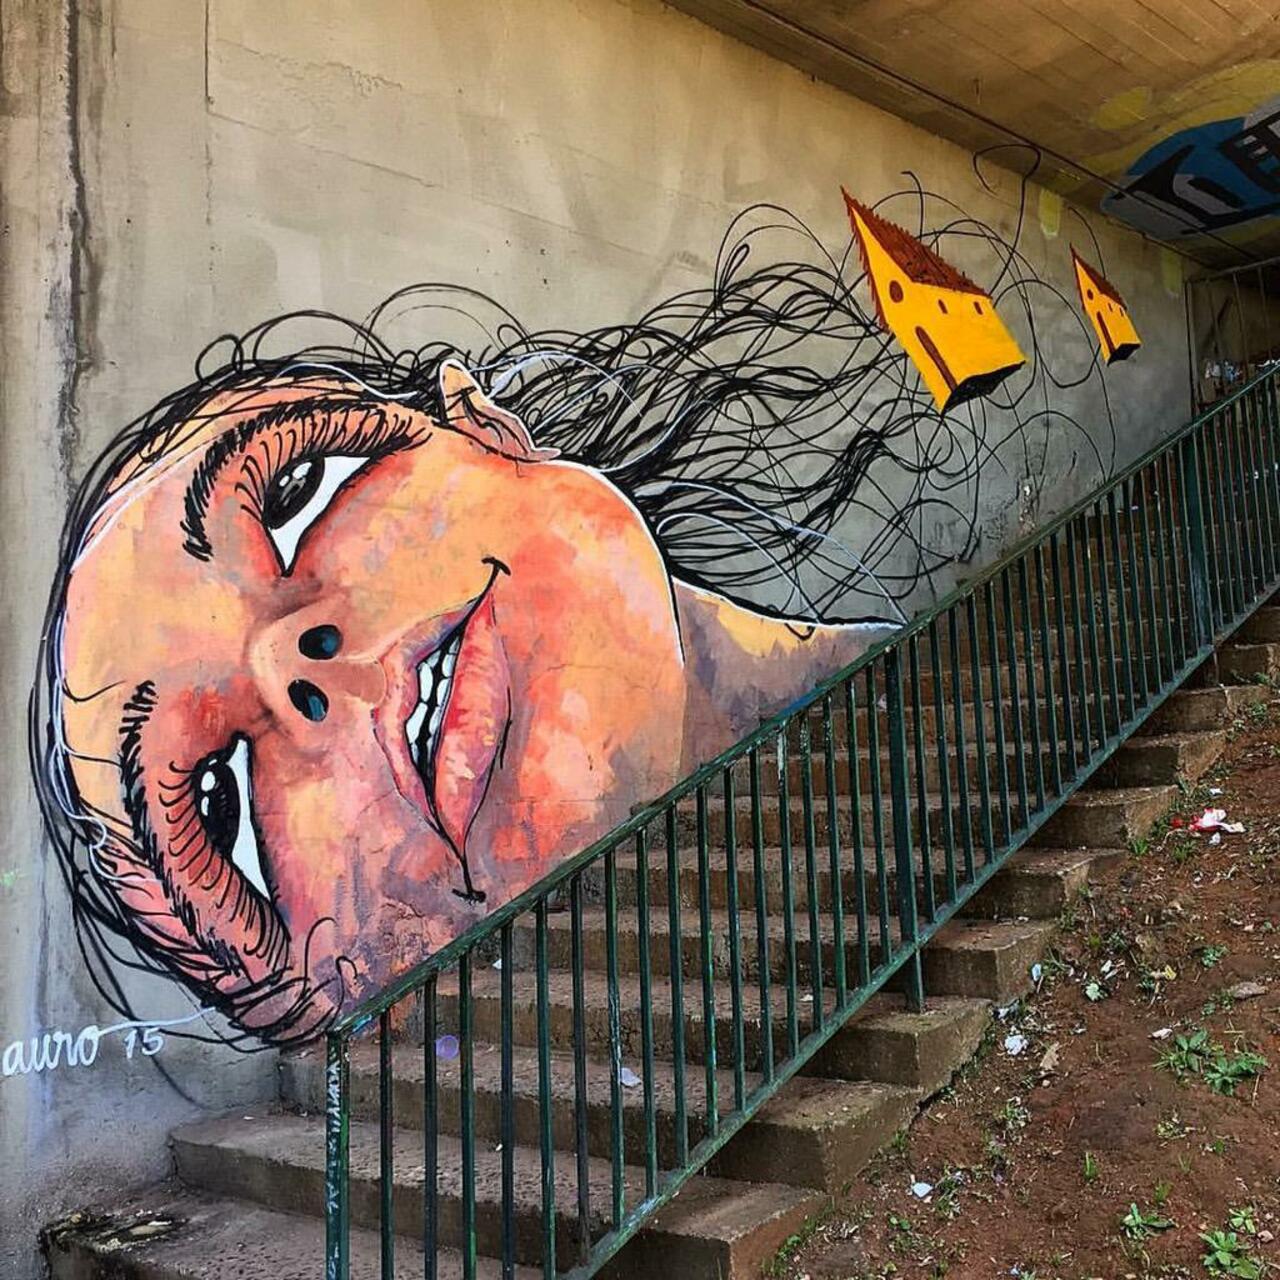 Street Art by Reveracidade in São Paulo 

#art #graffiti #mural #streetart http://t.co/zMZXQdMvJB